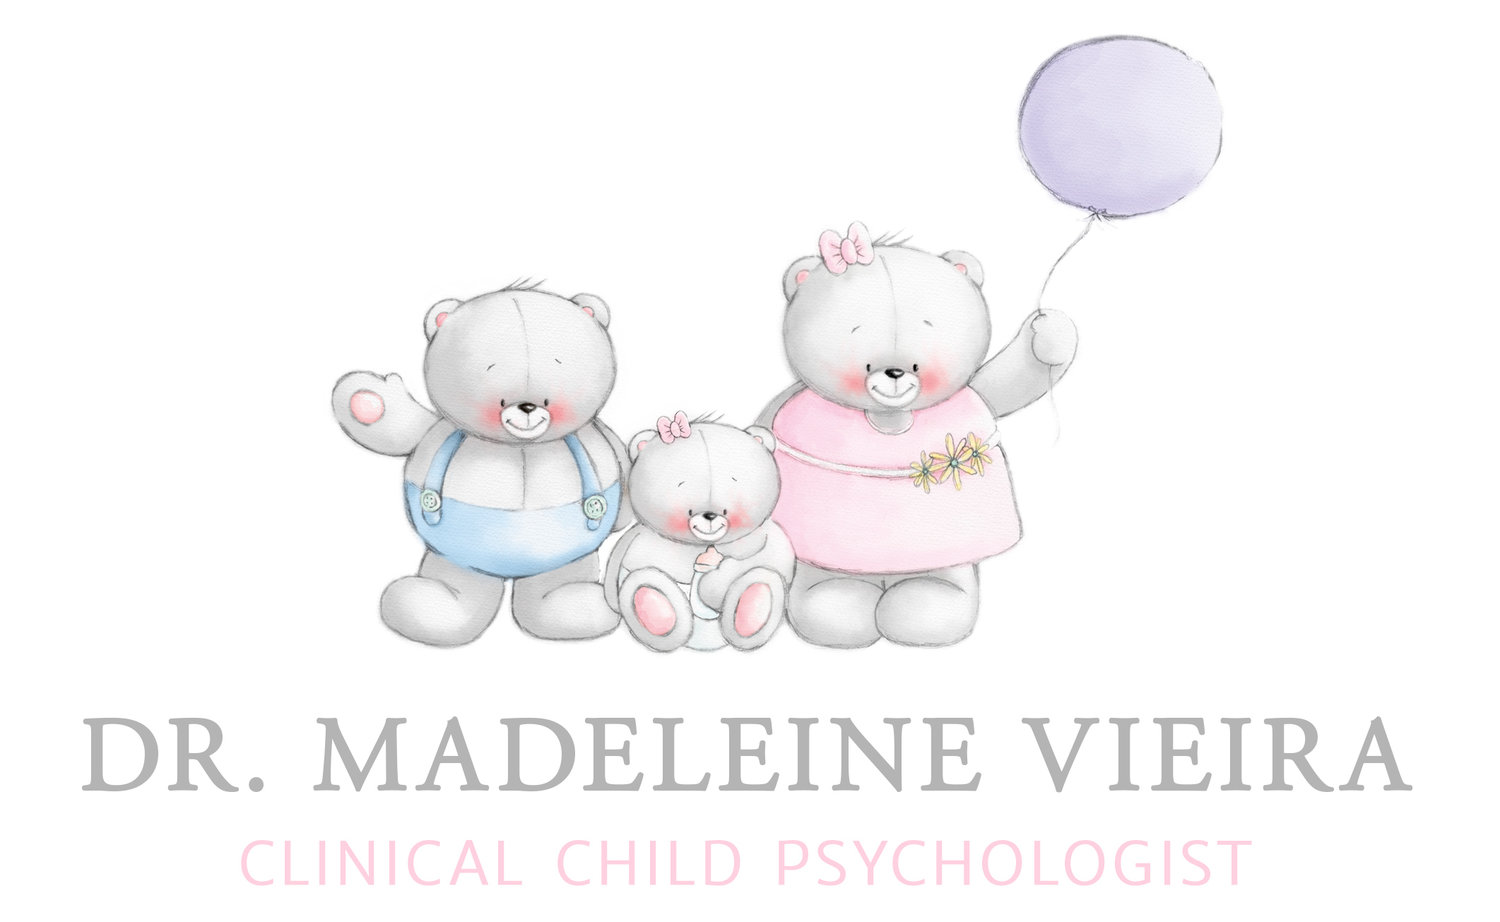 Dr. Madeleine Vieira - Clinical Child Psychologist - South Kensington, London